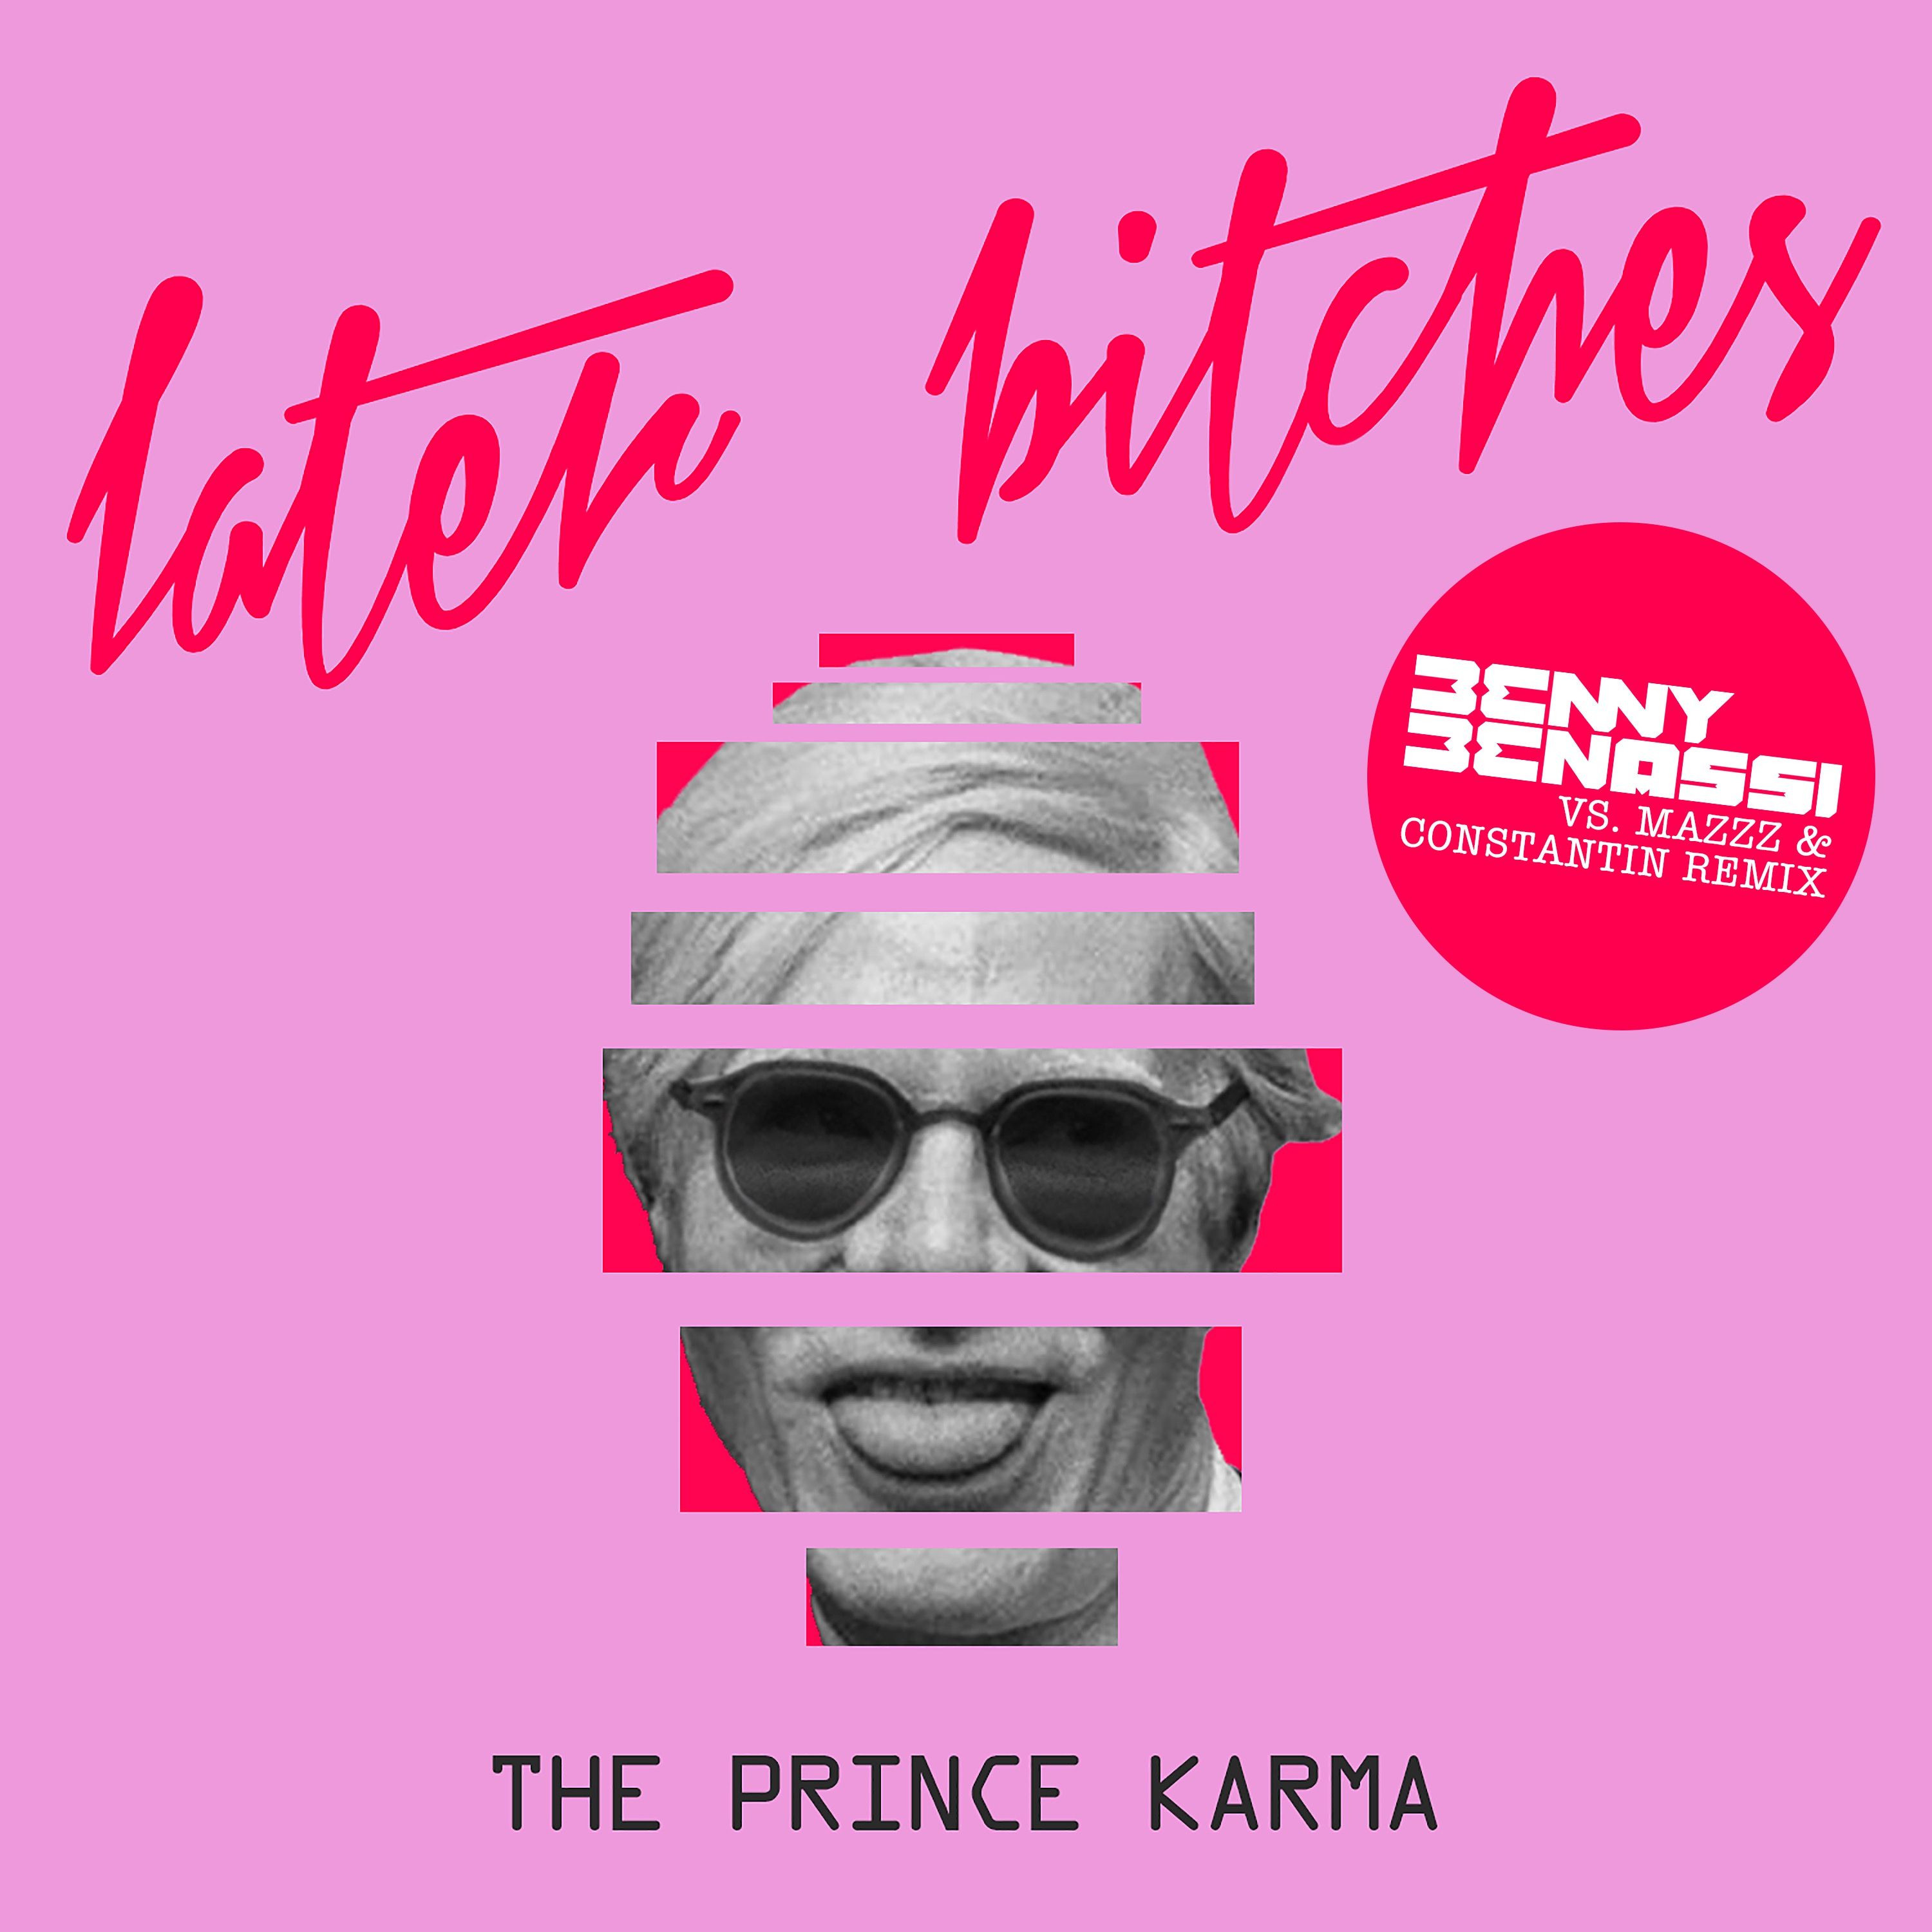 Aflaai The Prince Karma - Later Bitches (Benny Benassi Vs. MazZz & Constantin Remix)